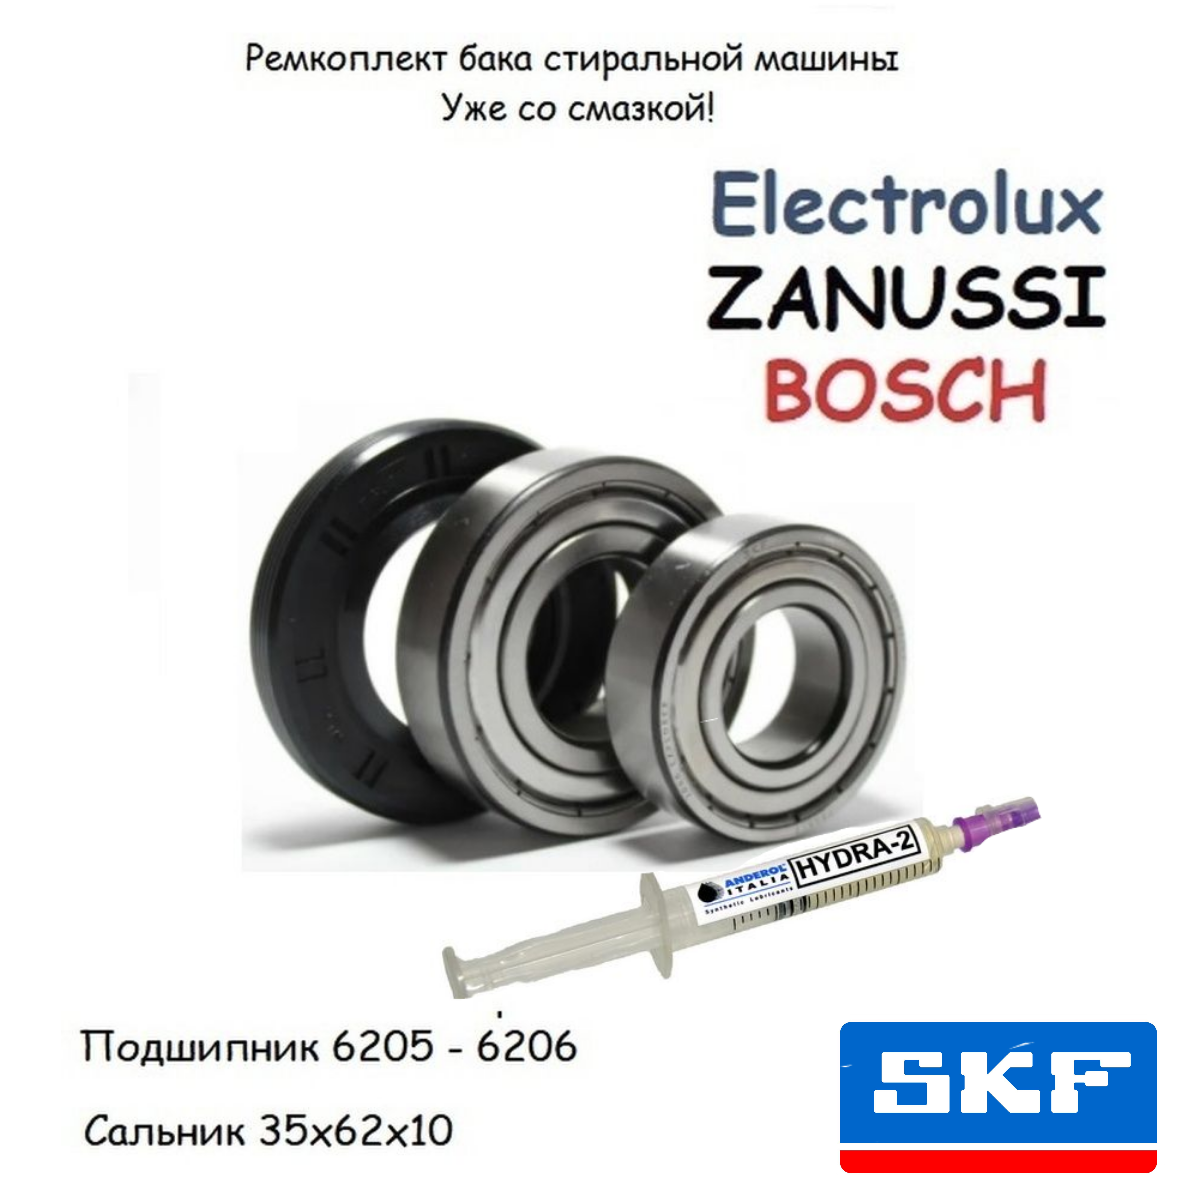 Ремкомплект подшипников Bosch, Electrolux б205 /6206 ZZ /сальник 35х62 11/12,5. смазка HIDRA-2 2гр.